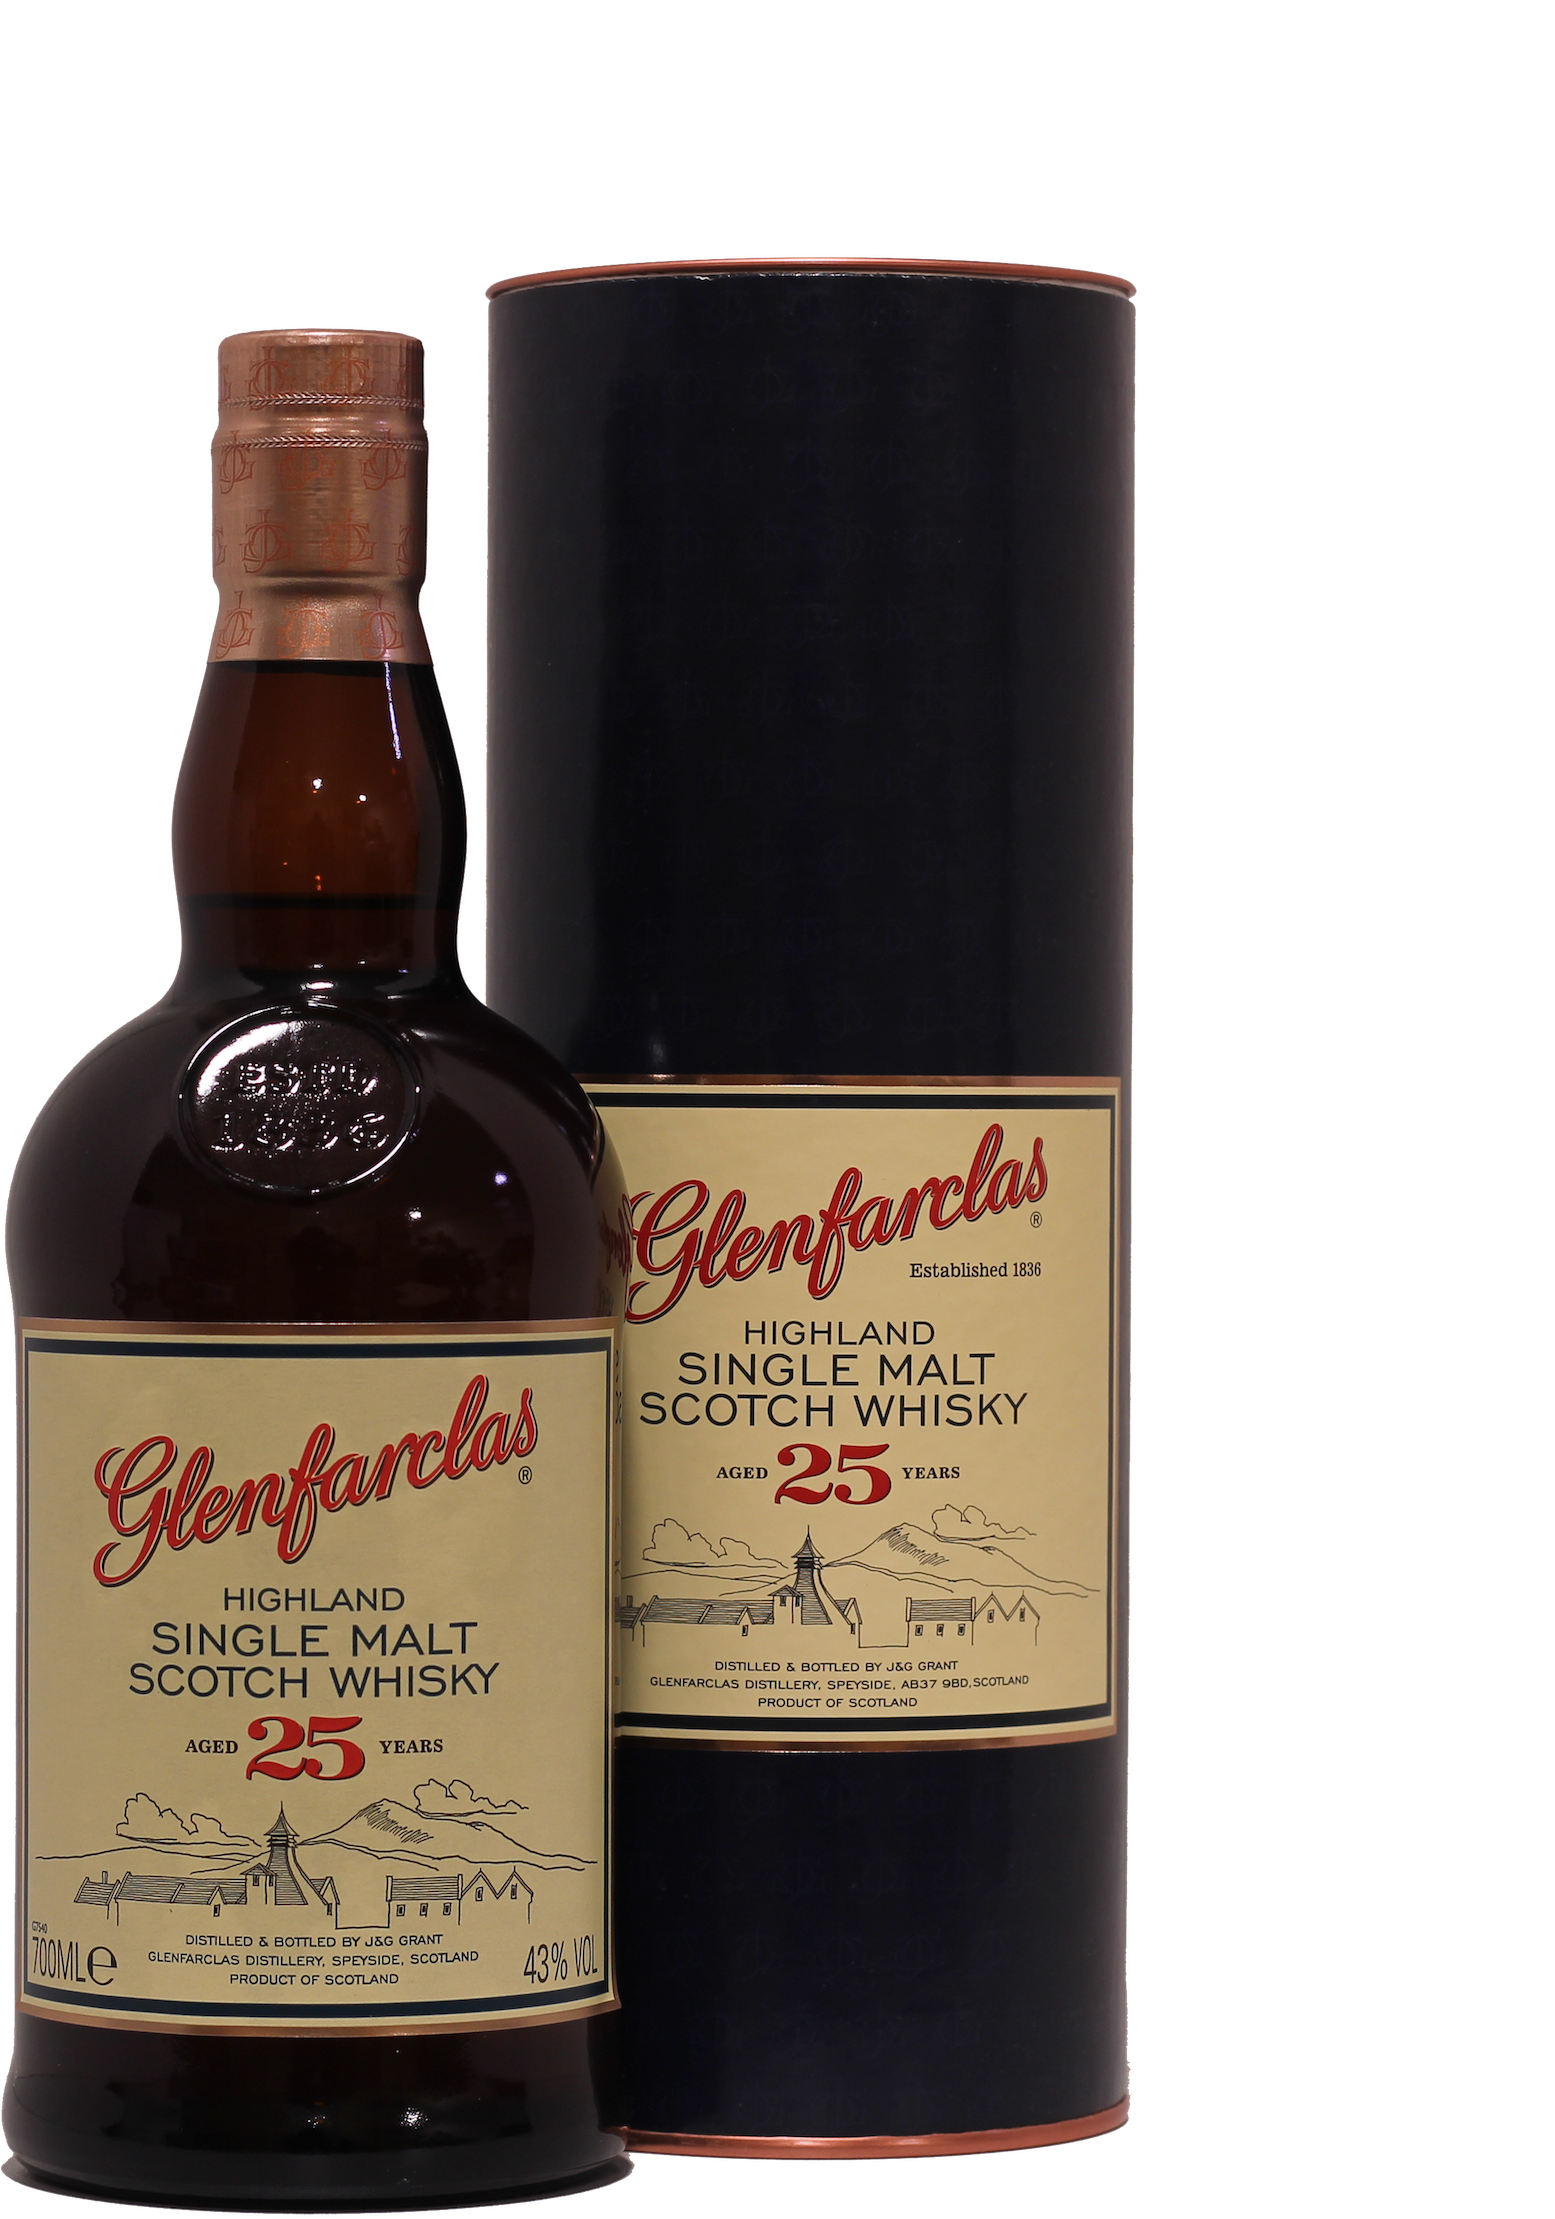 Wine Vins Glenfarclas Whisky 25 Anos